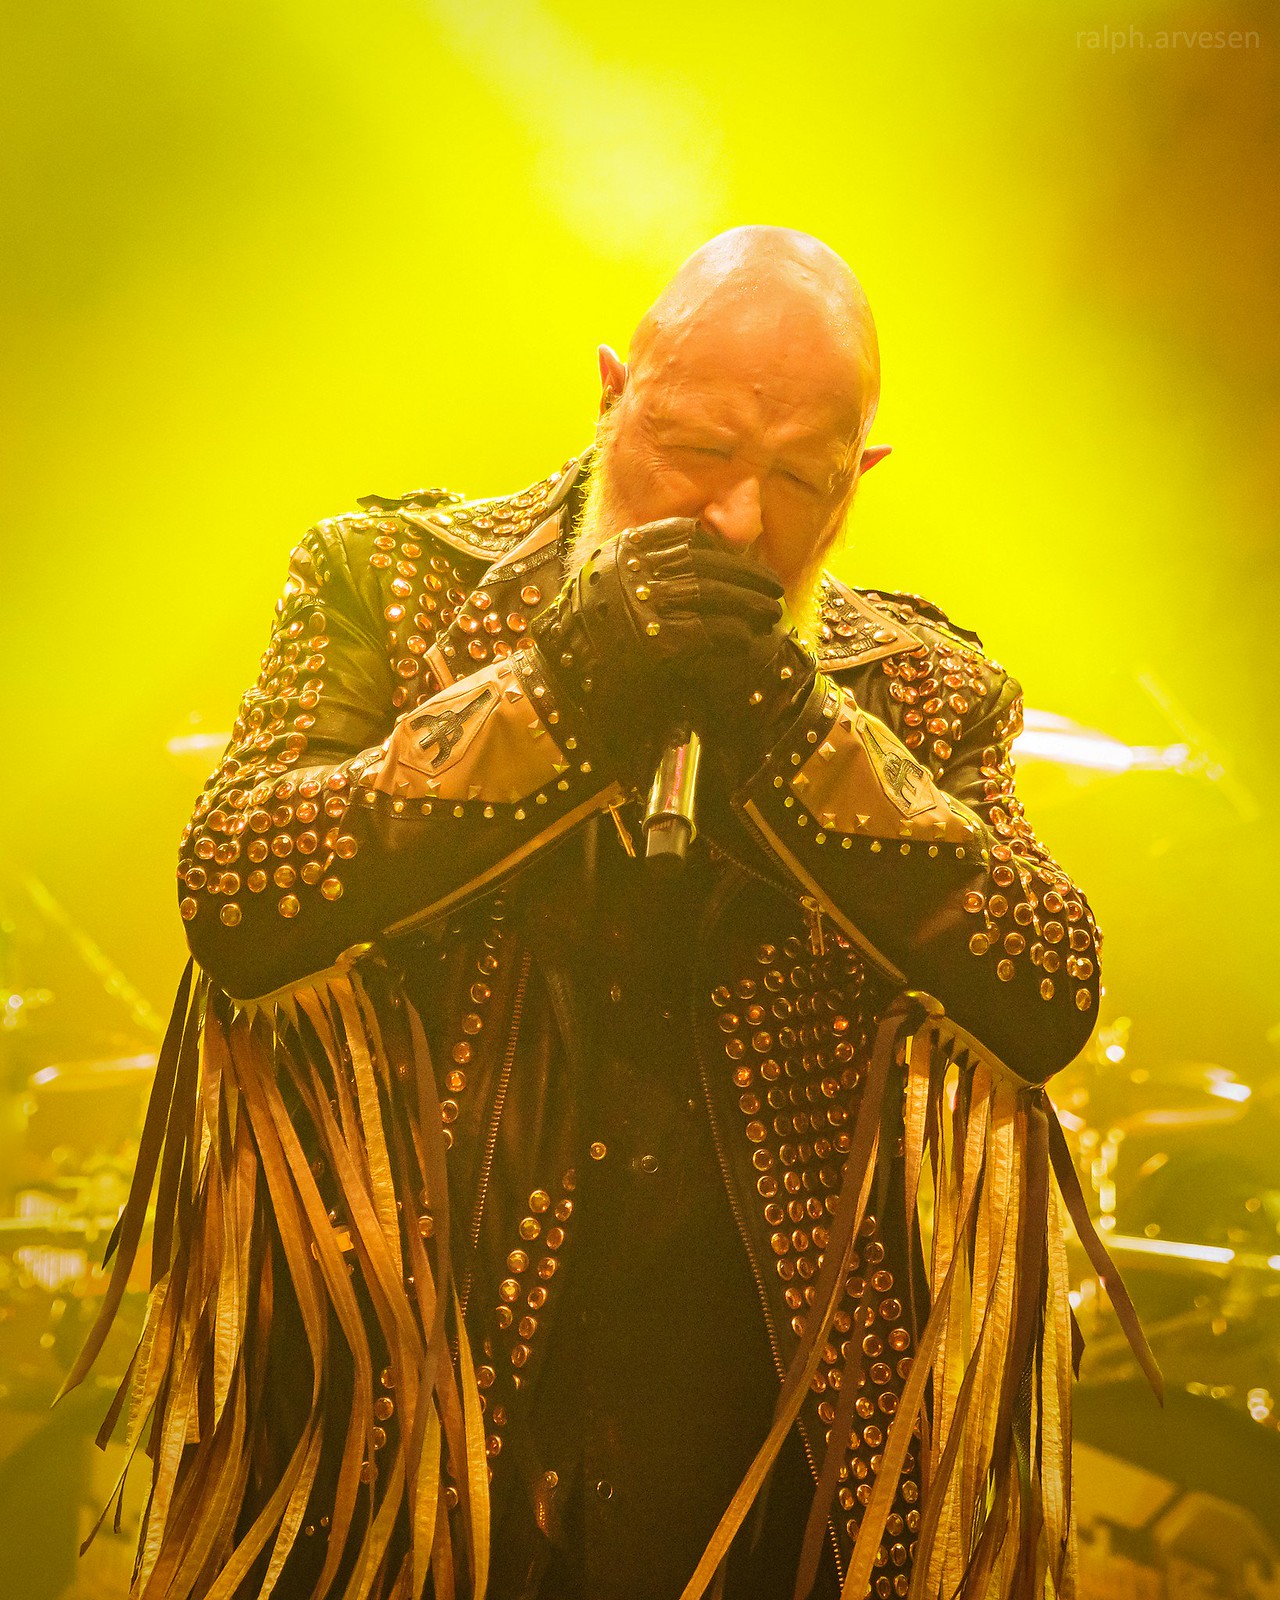 Judas Priest | Texas Review | Ralph Arvesen